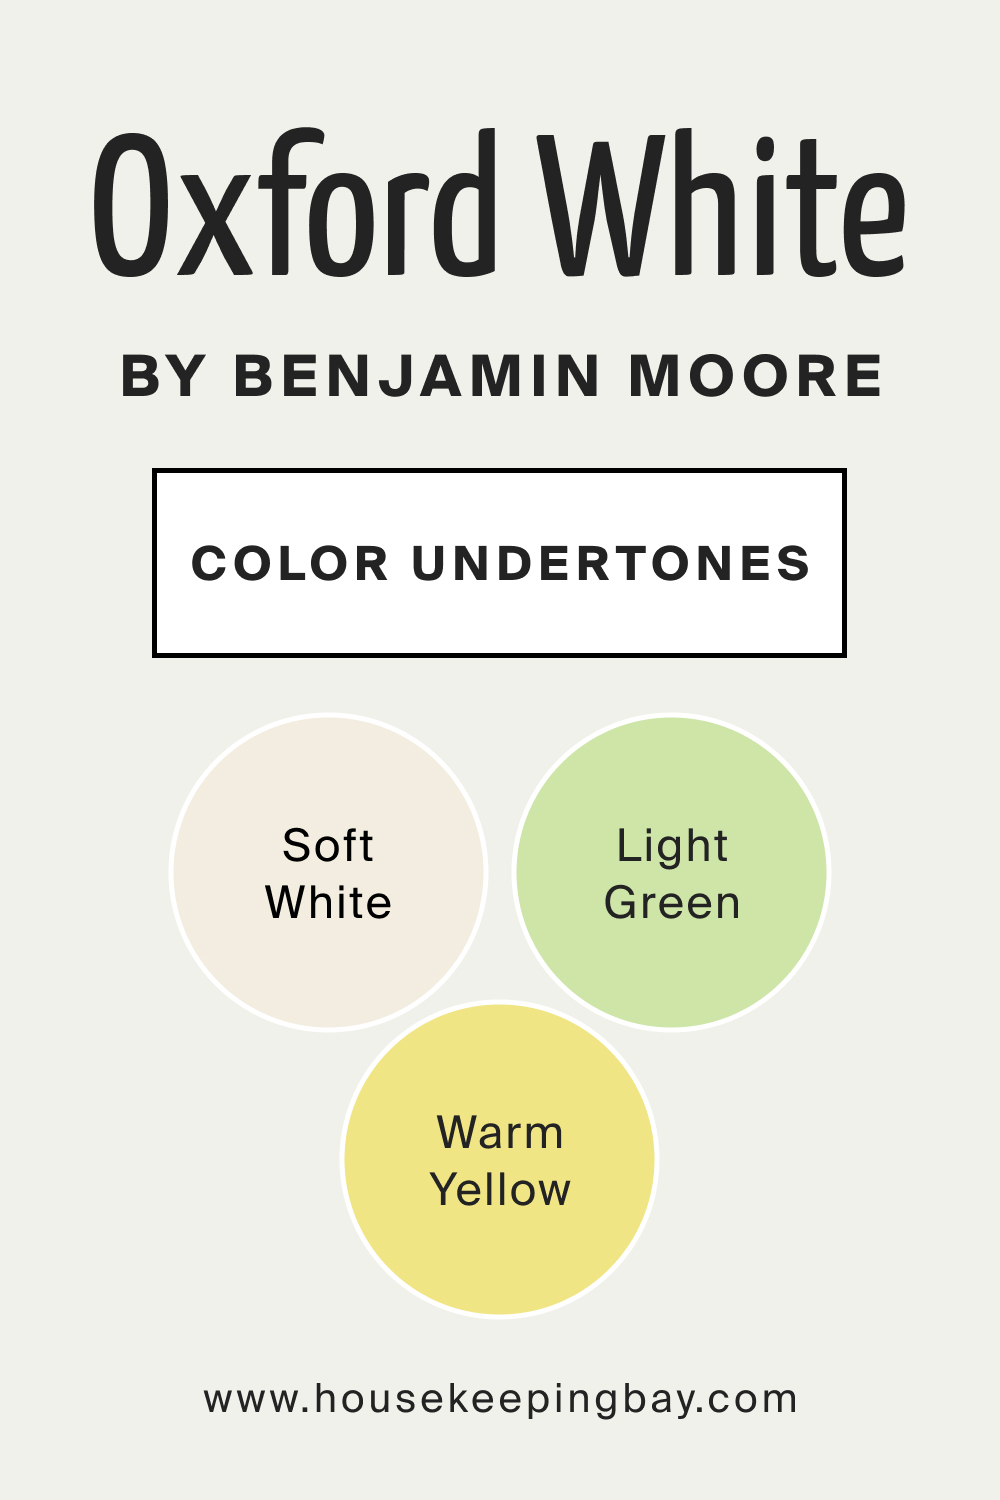 Oxford White CC 30 by Benjamin Moore Undertones